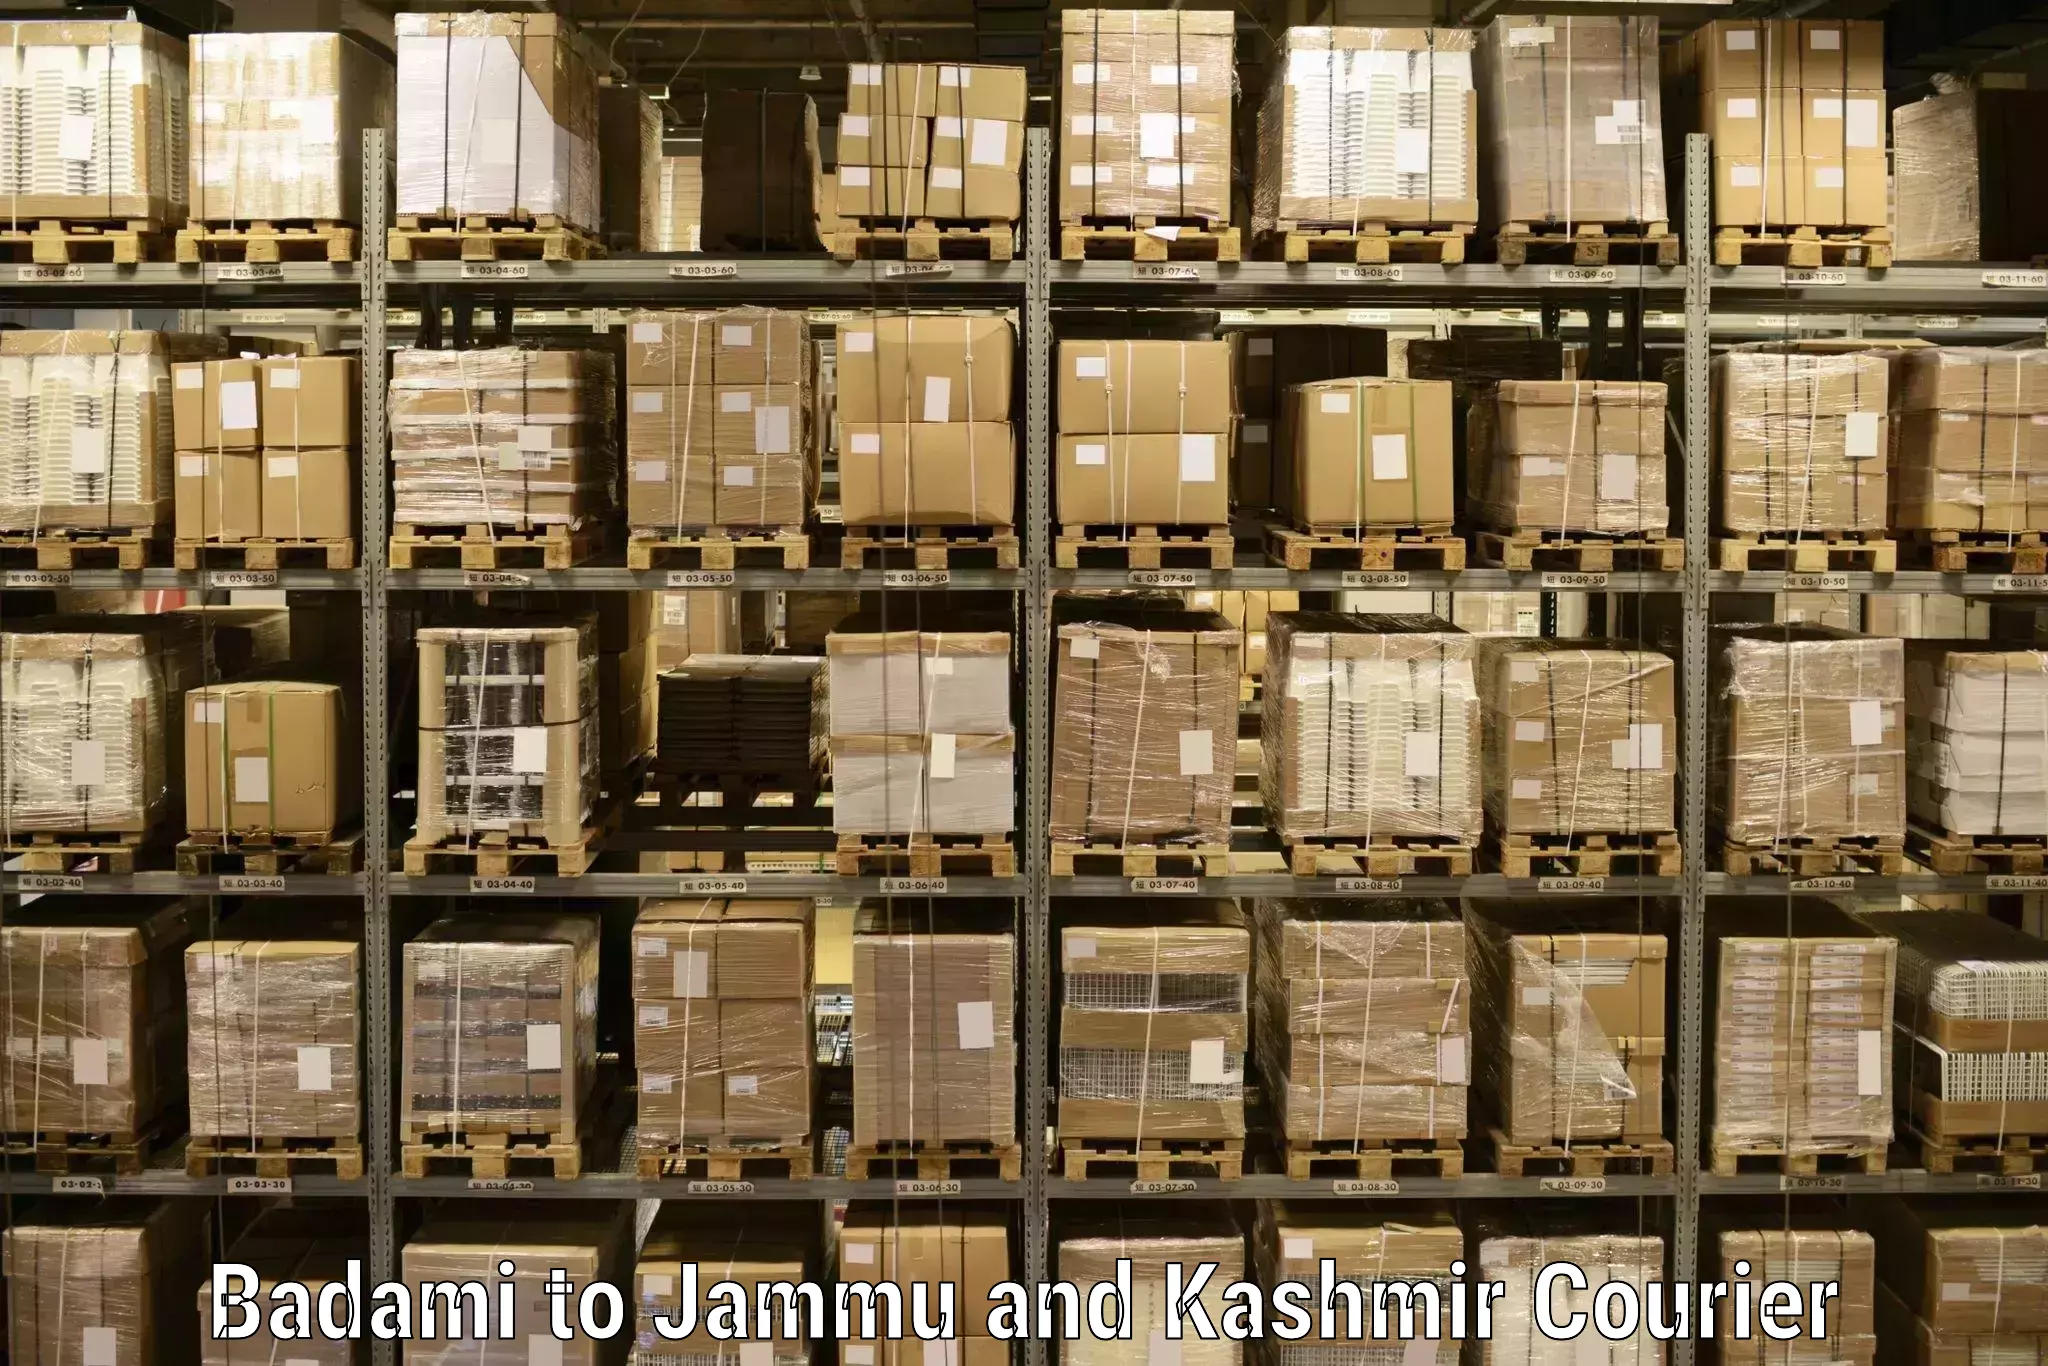 Courier service innovation Badami to Jammu and Kashmir